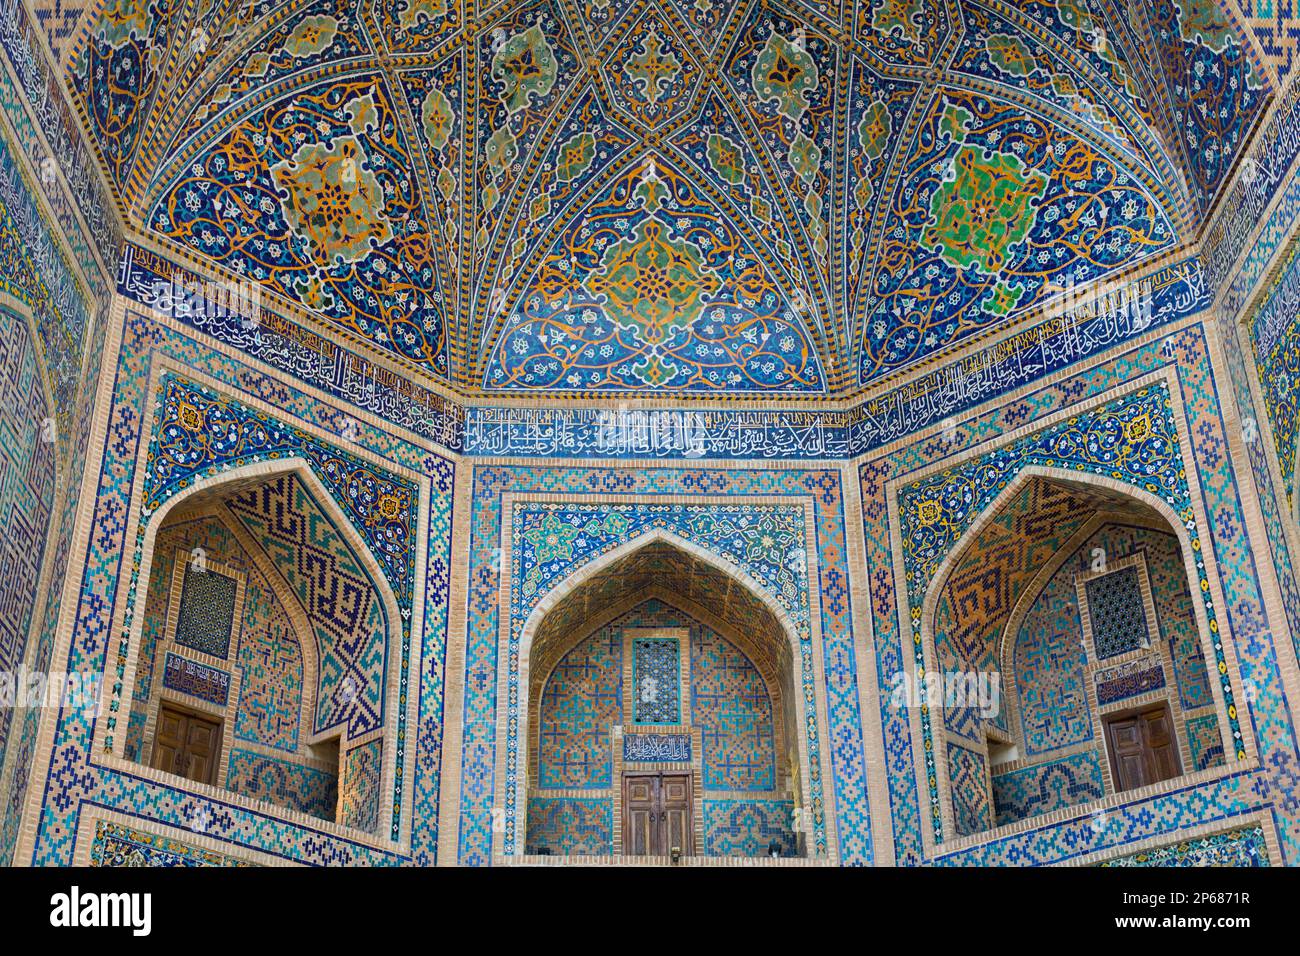 Eingangsdecke und Wandfliesen, Tilla-Kari Madrassah, fertiggestellt 1660, Registanplatz, UNESCO, Samarkand, Usbekistan Stockfoto